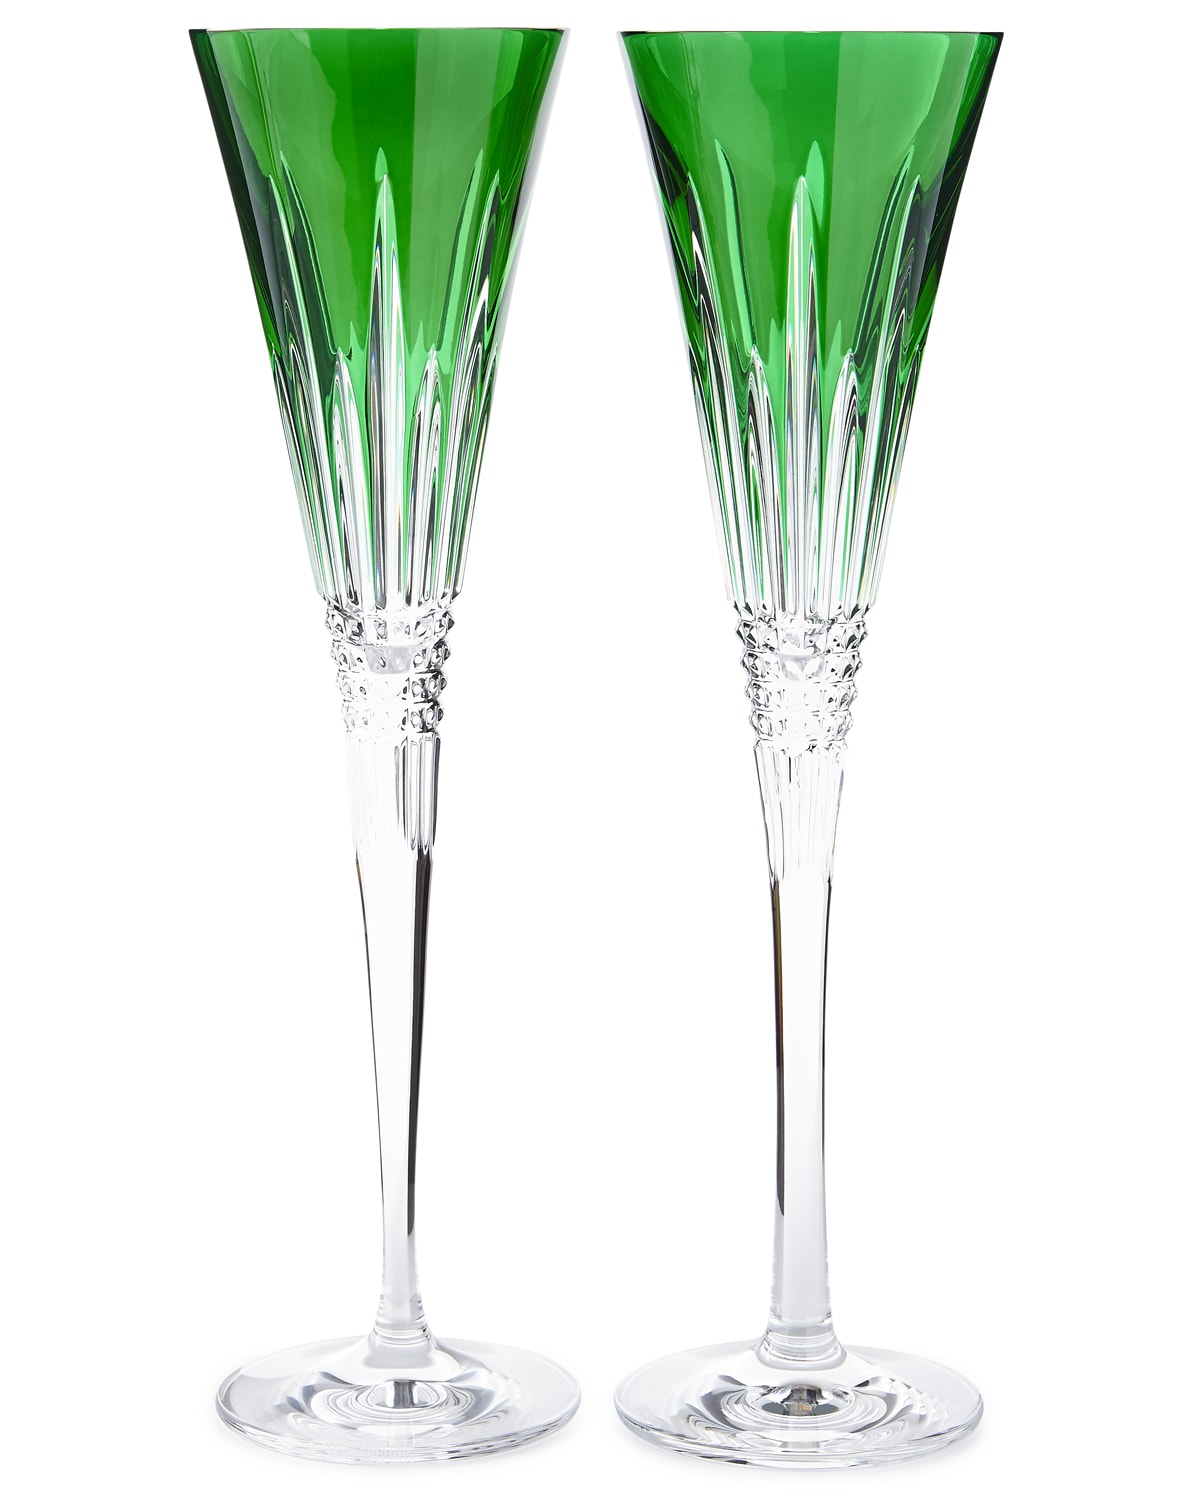 Image Waterford Crystal Lismore Diamond Toasting Flutes, Emerald, Set of 2